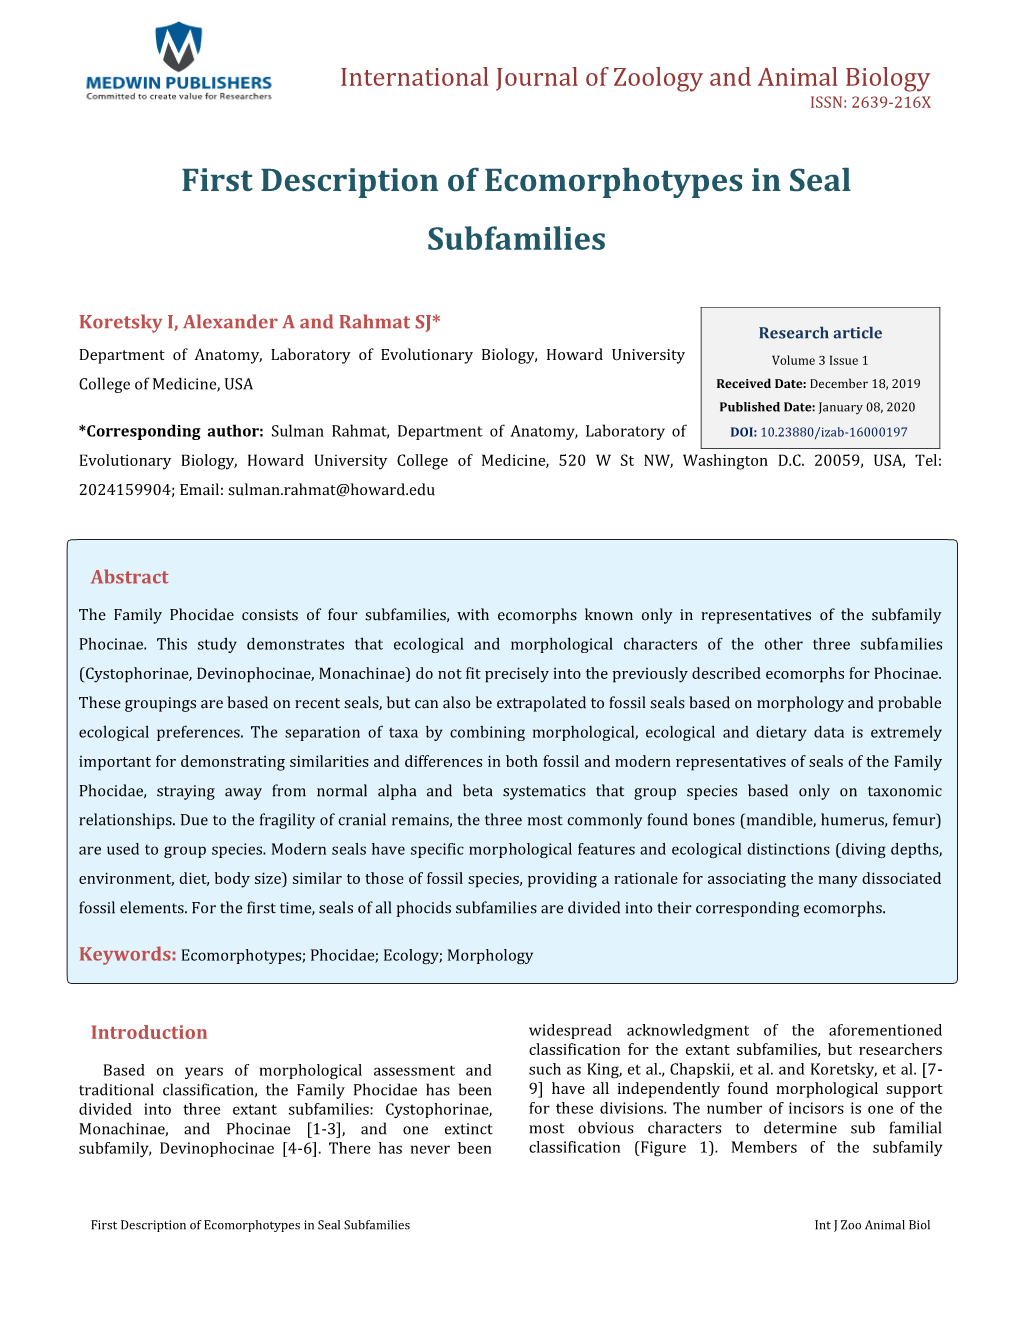 Koretsky I, Et Al. First Description of Ecomorphotypes in Seal Subfamilies